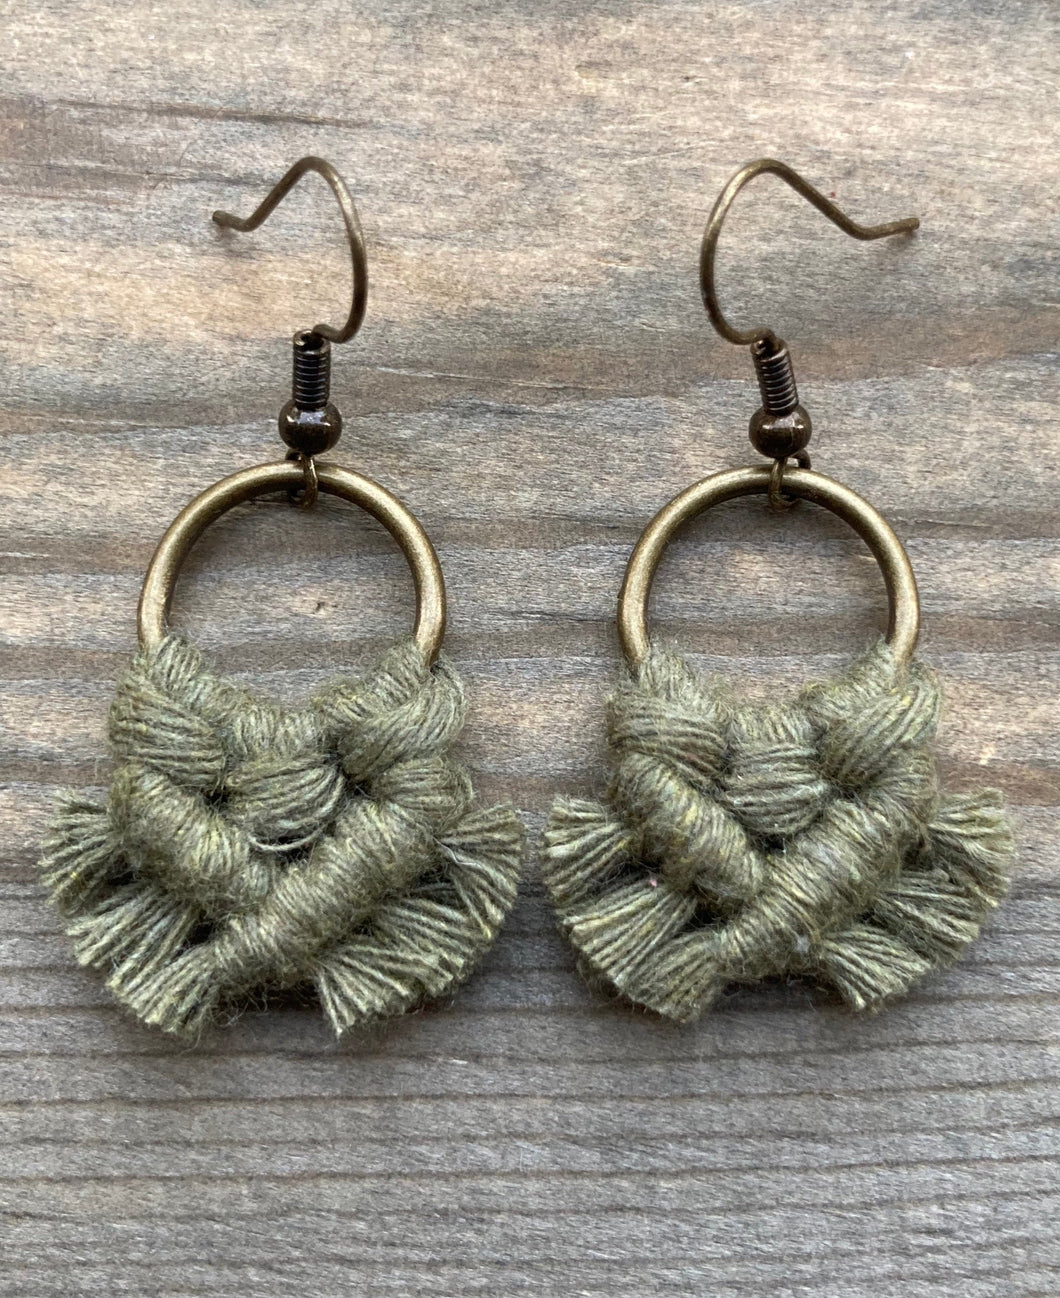 Micro Fringe Round Earrings - Avocado Green & Bronze